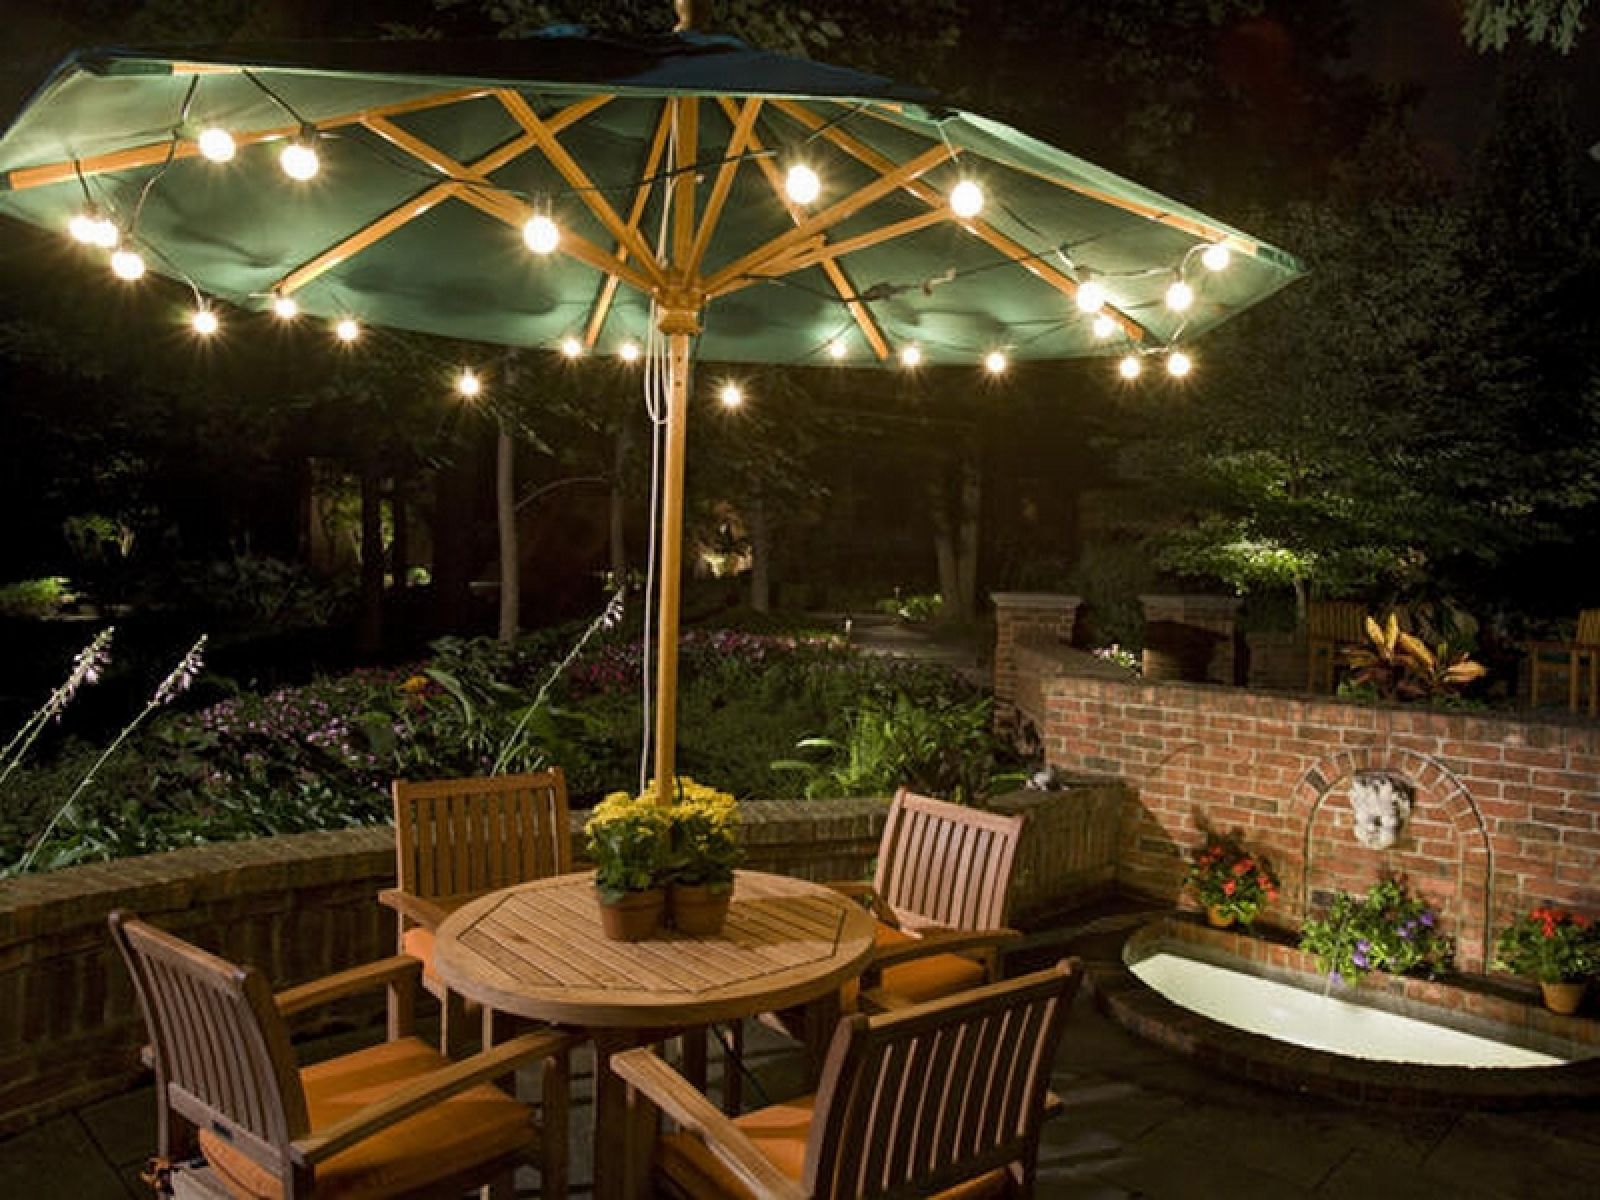 Admirable patio lighting ideas on the Umbrella as bright lighting idea